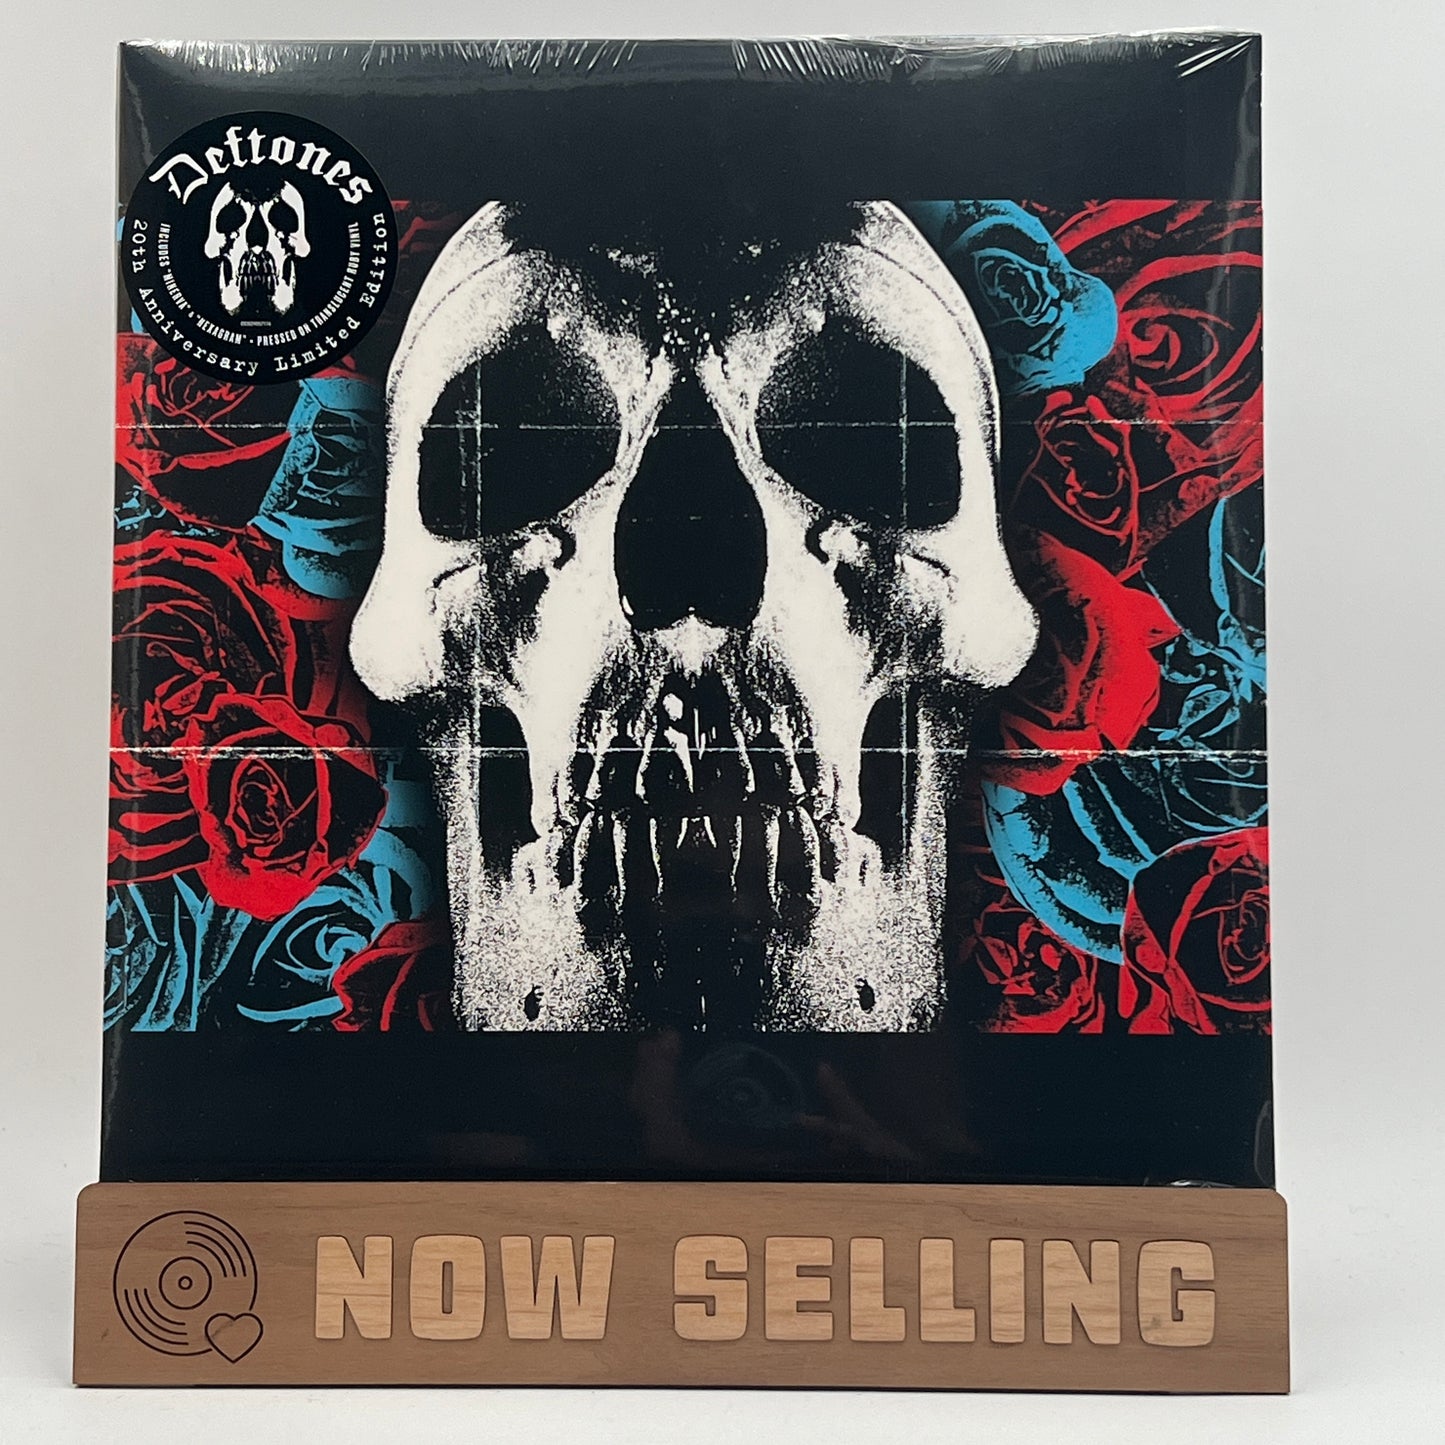 Deftones Self Titled Vinyl LP SEALED Red 20th Anniversary